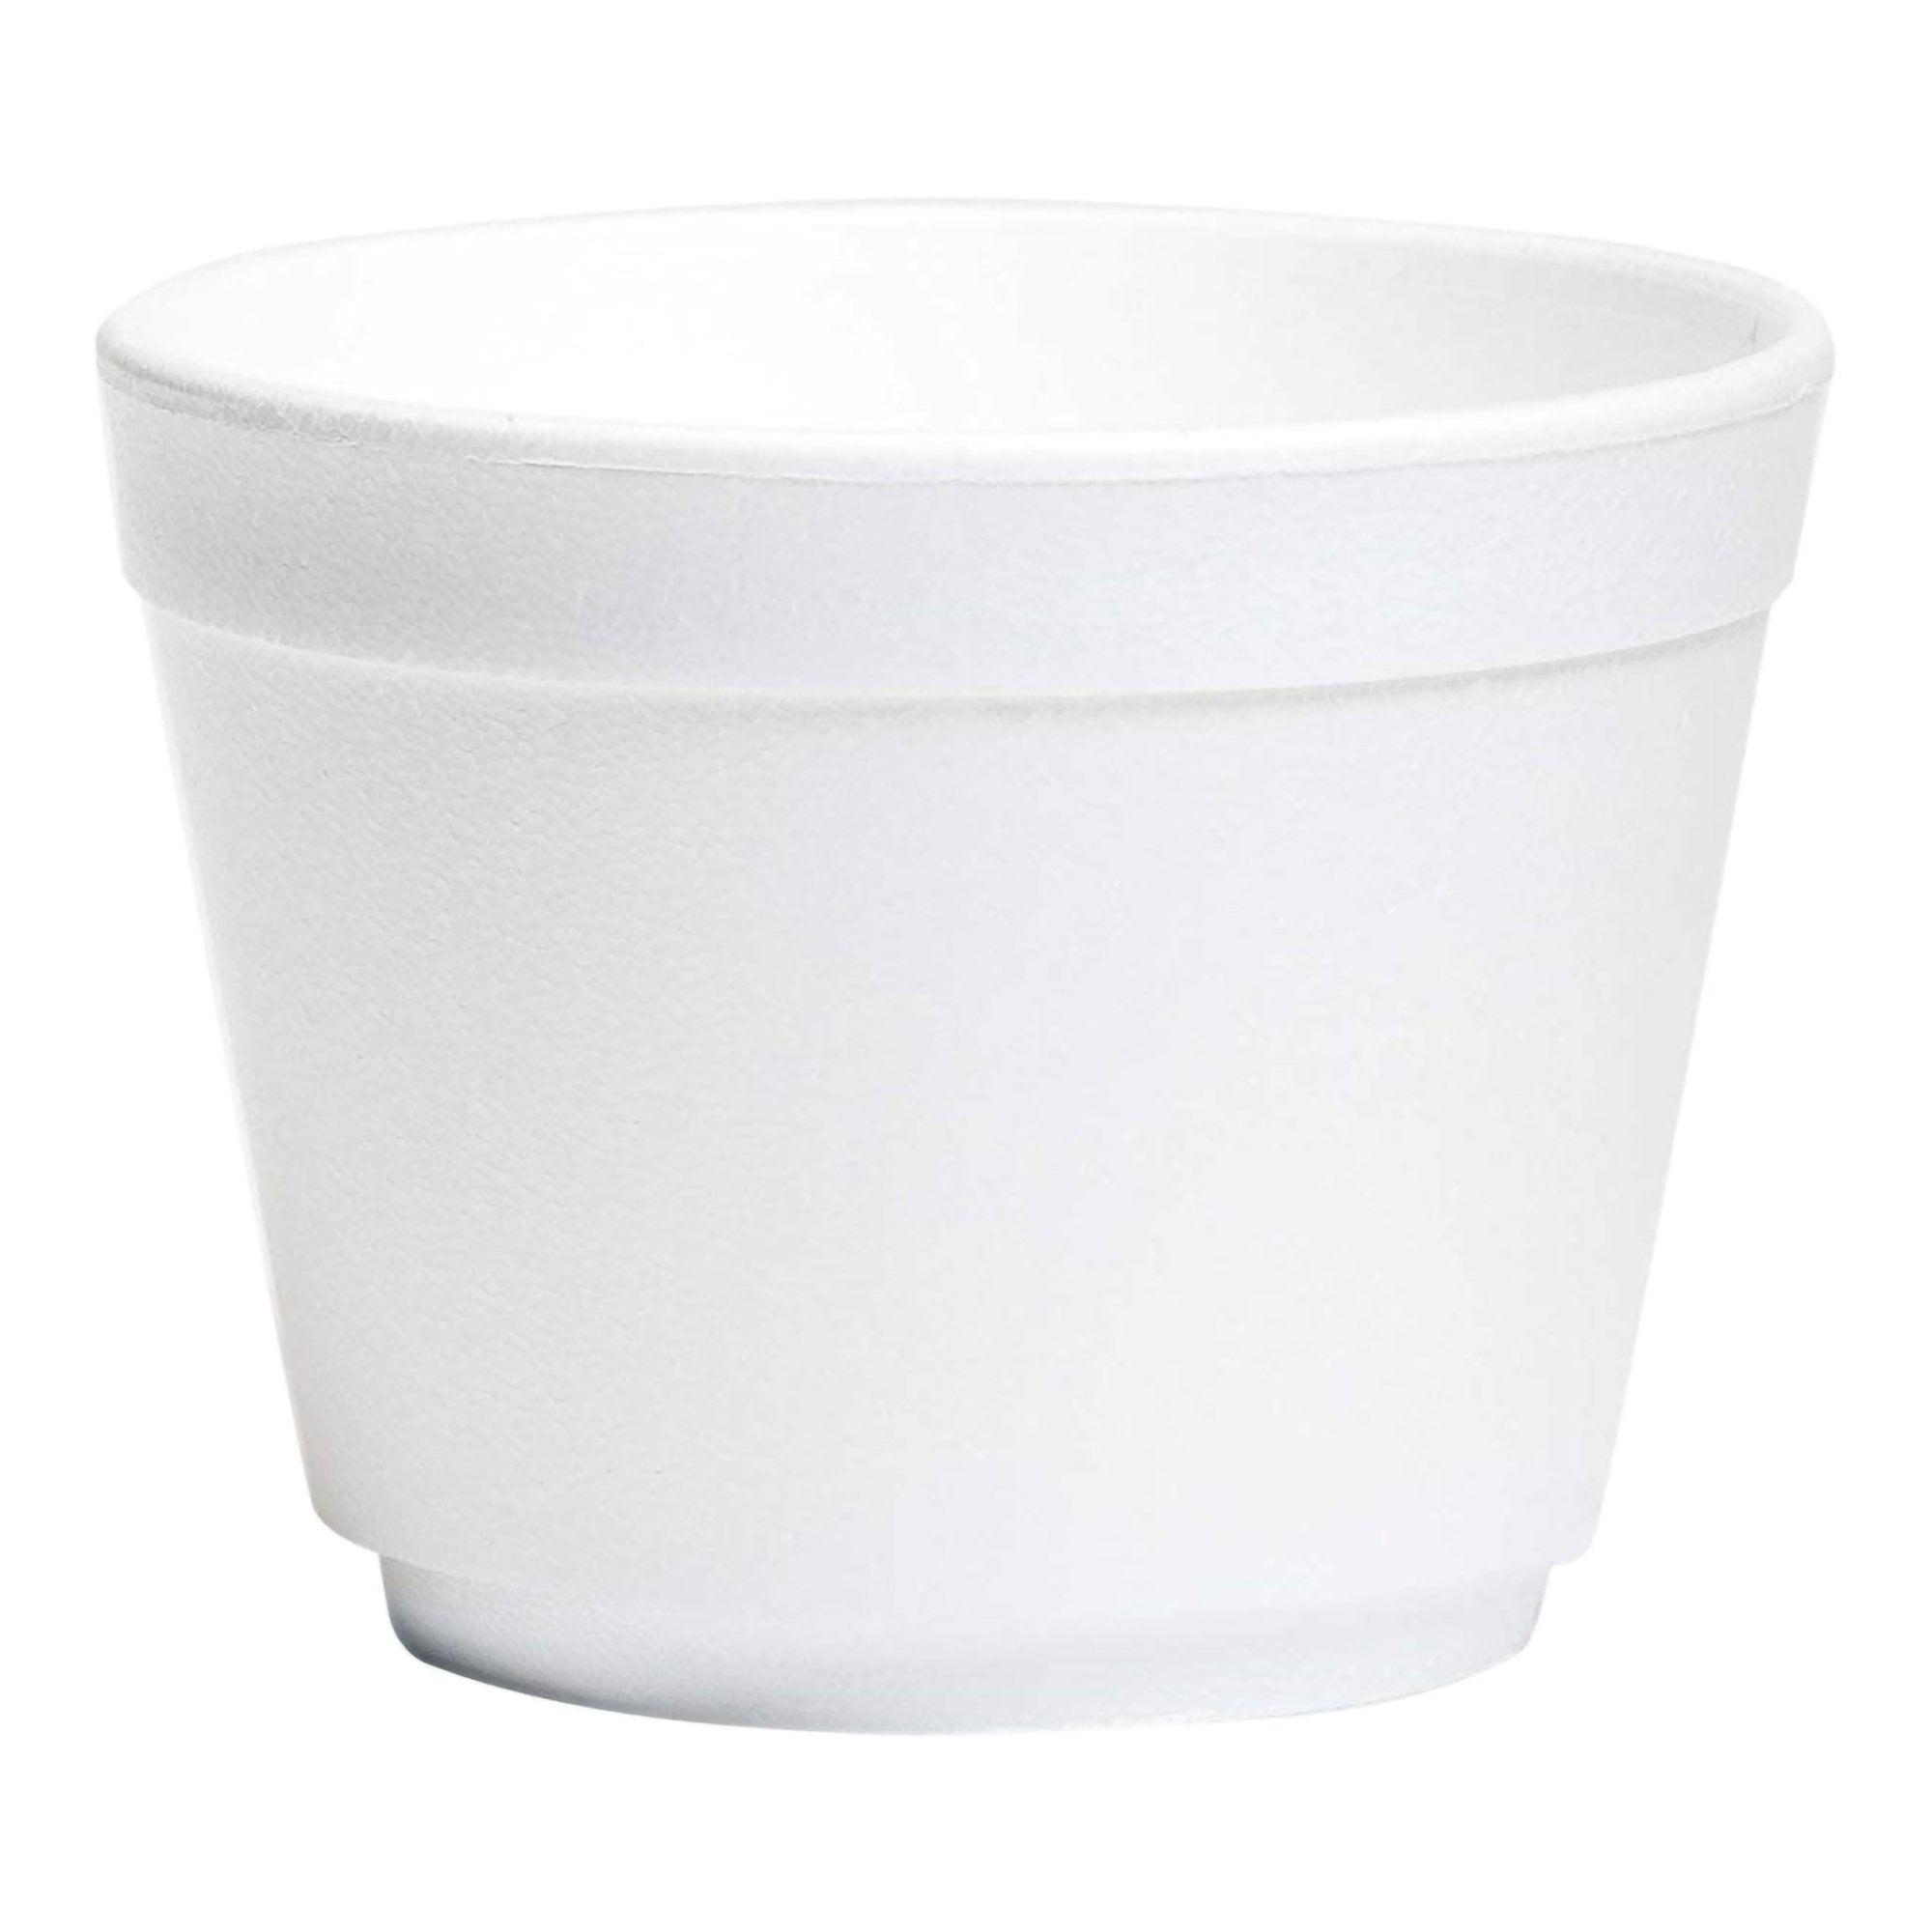 Bowl Wincup White Single Use Foam 4-1/2 Inch